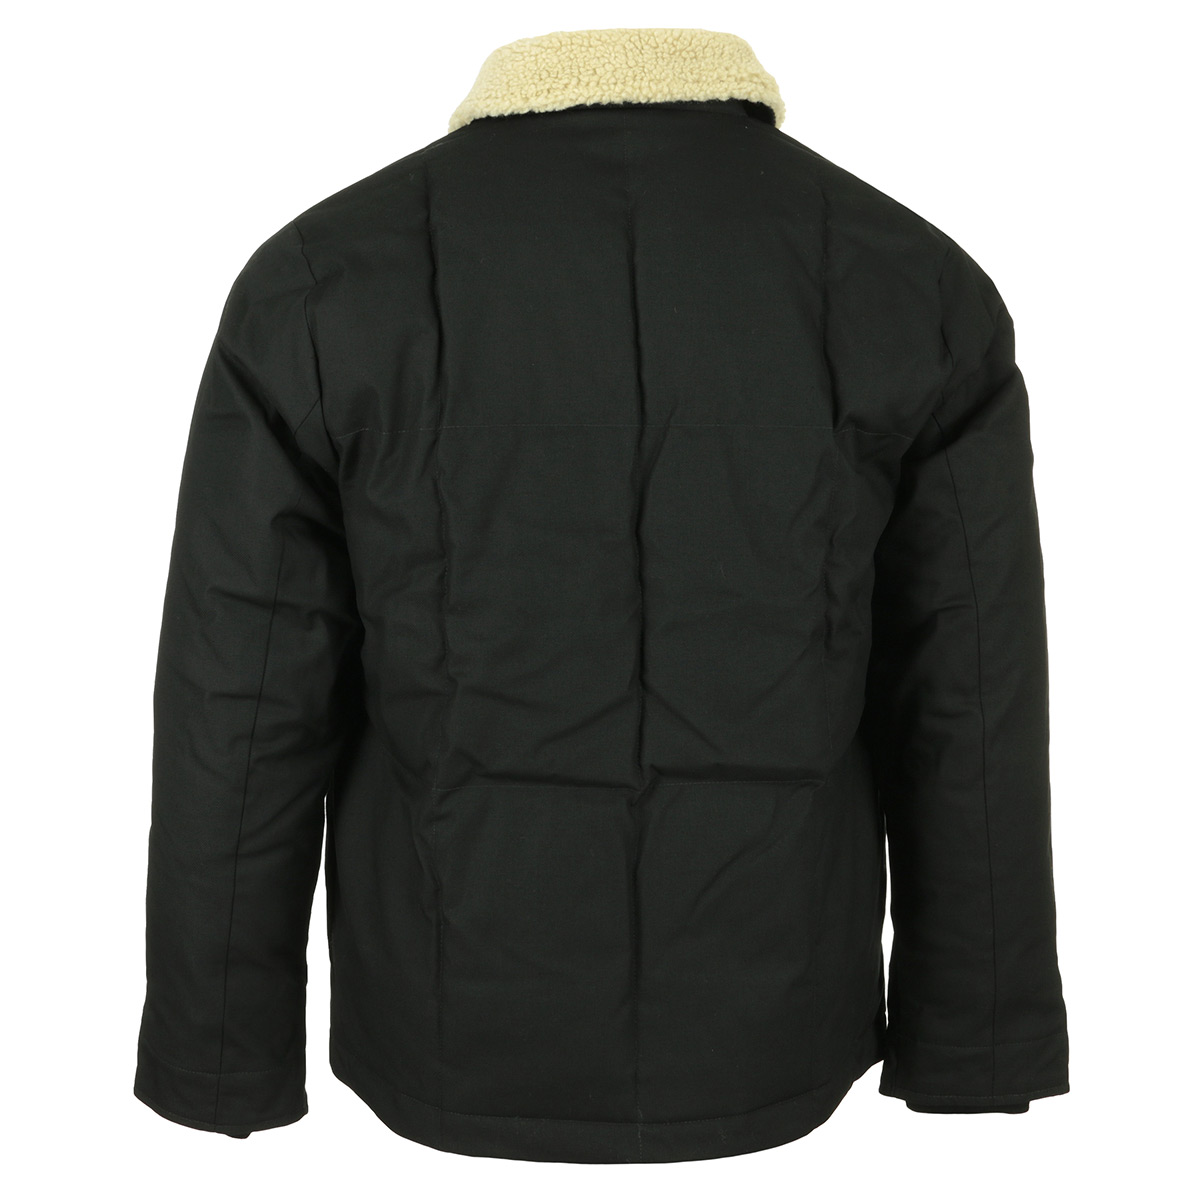 Carhartt Doncaster Jacket